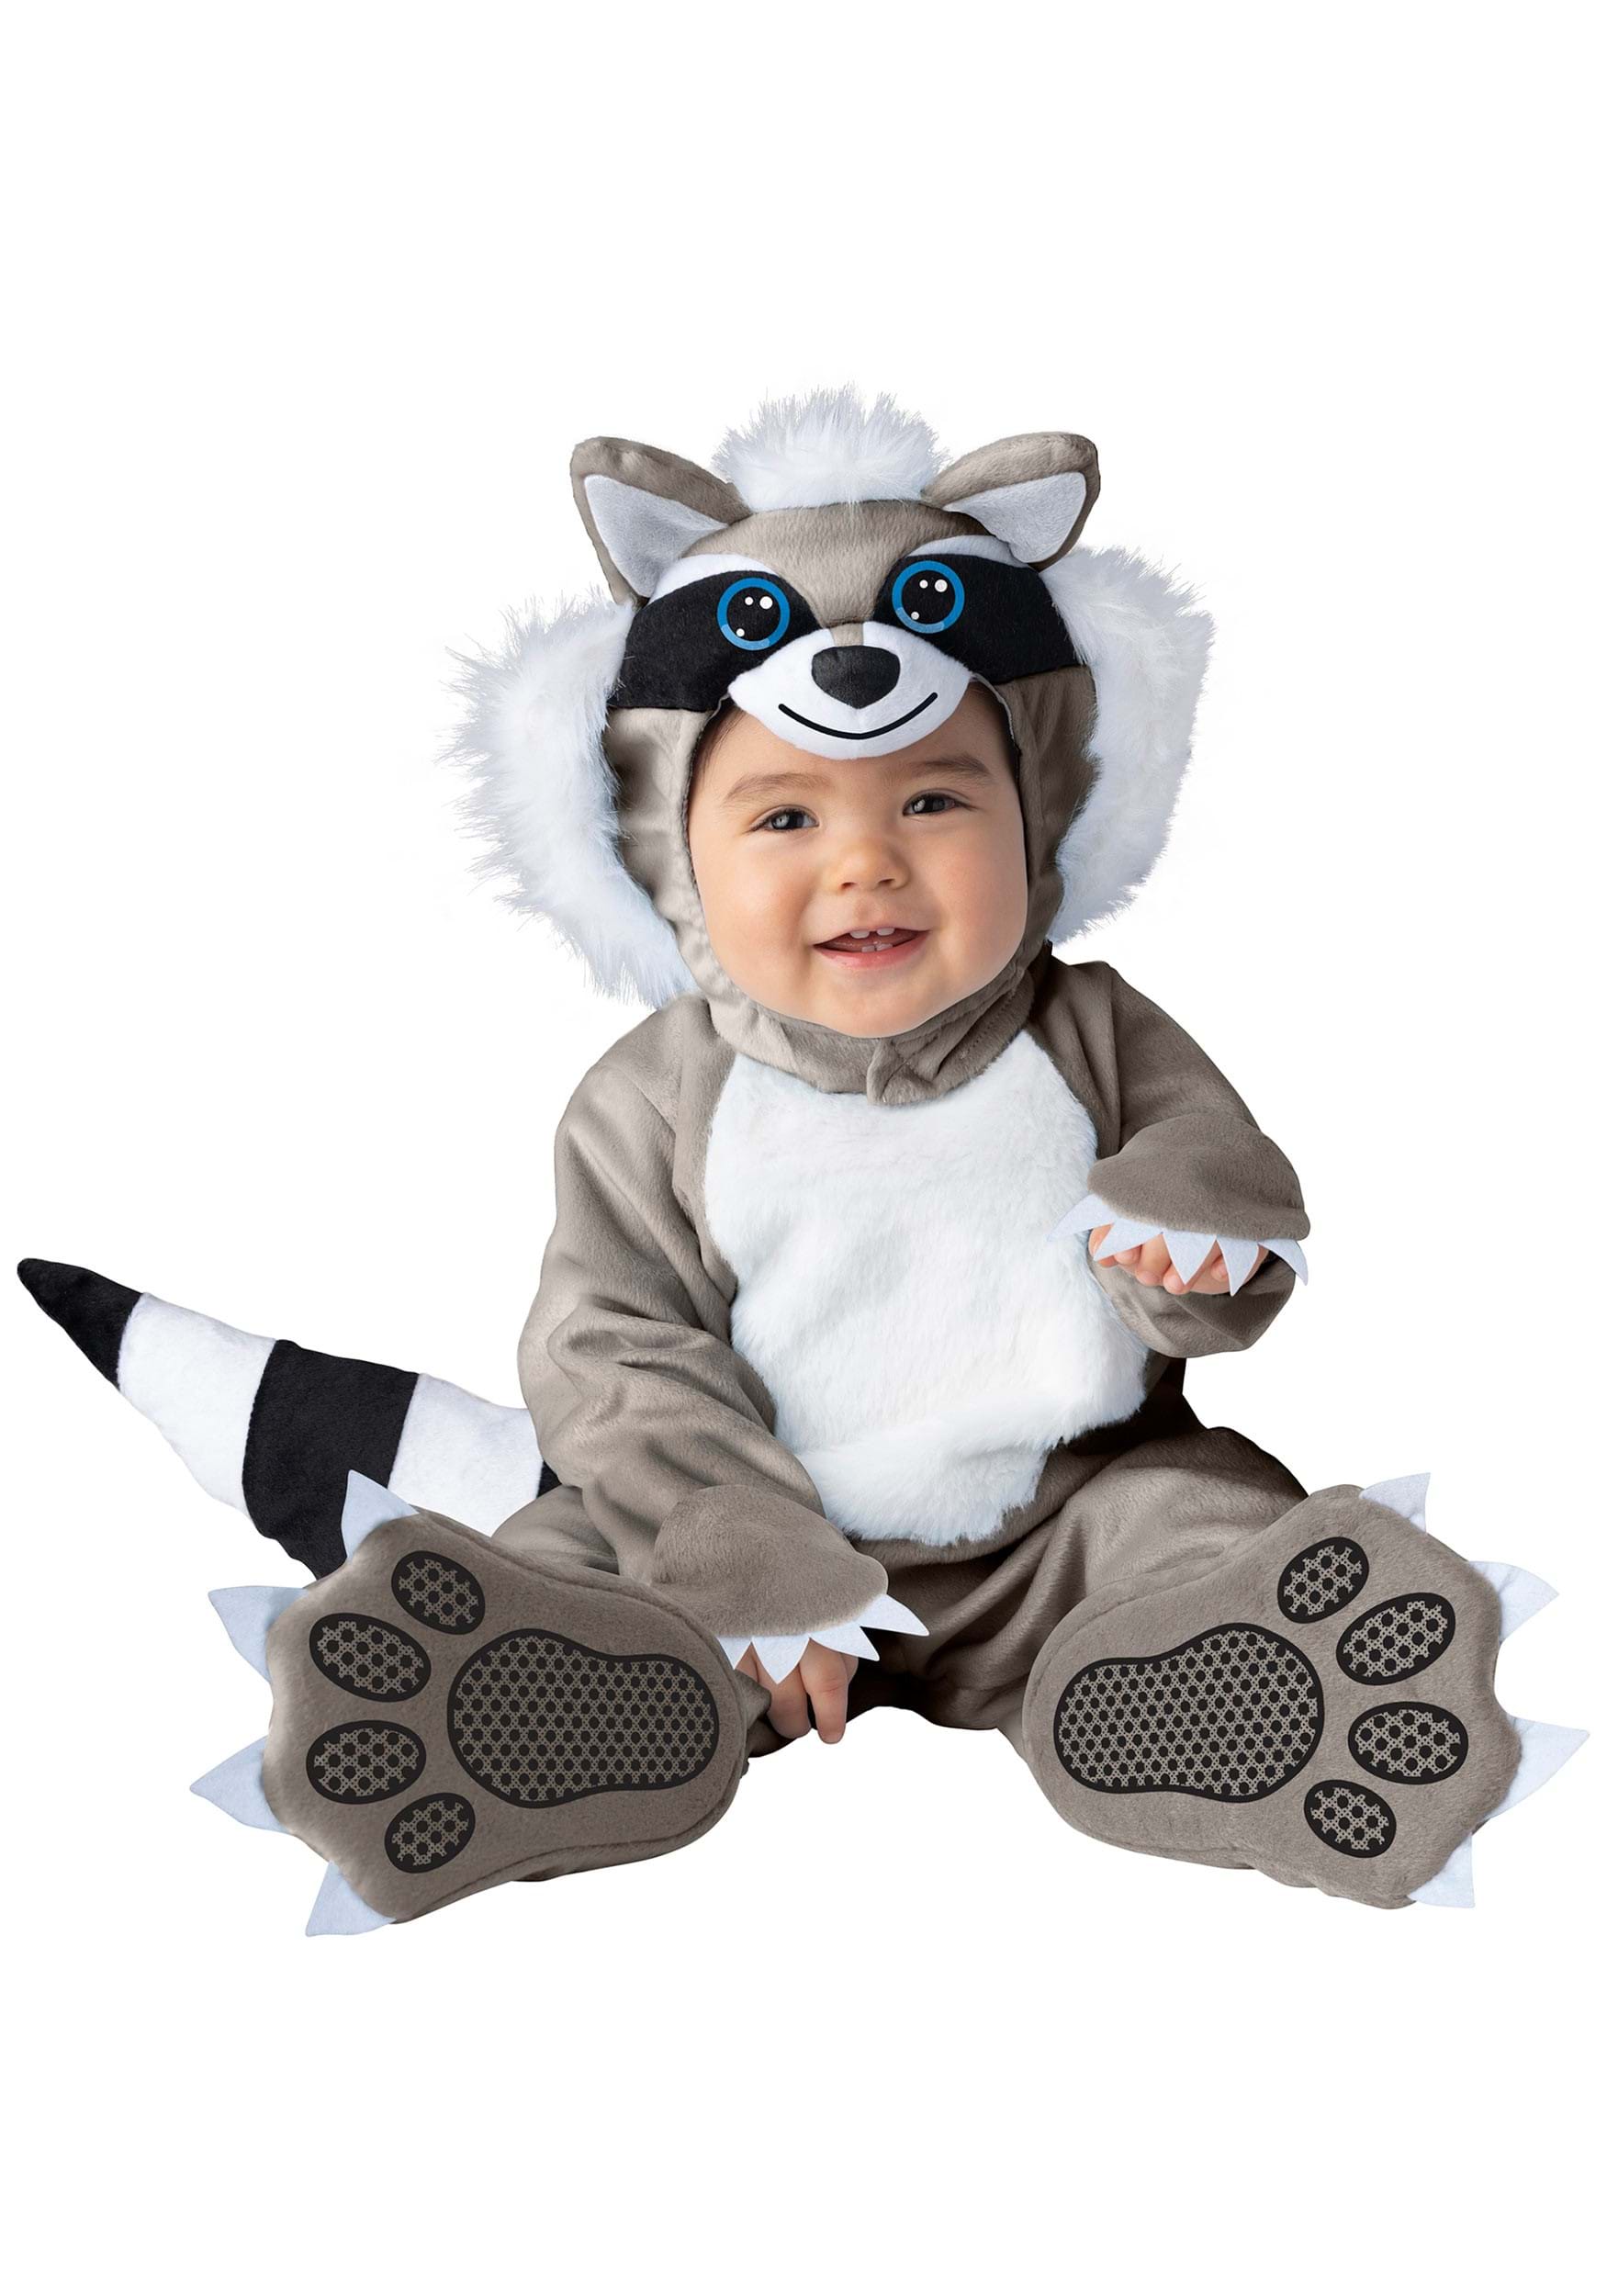 Photos - Fancy Dress Fun World Lil' Raccoon Costume for Infants Black/Gray/White INCK61